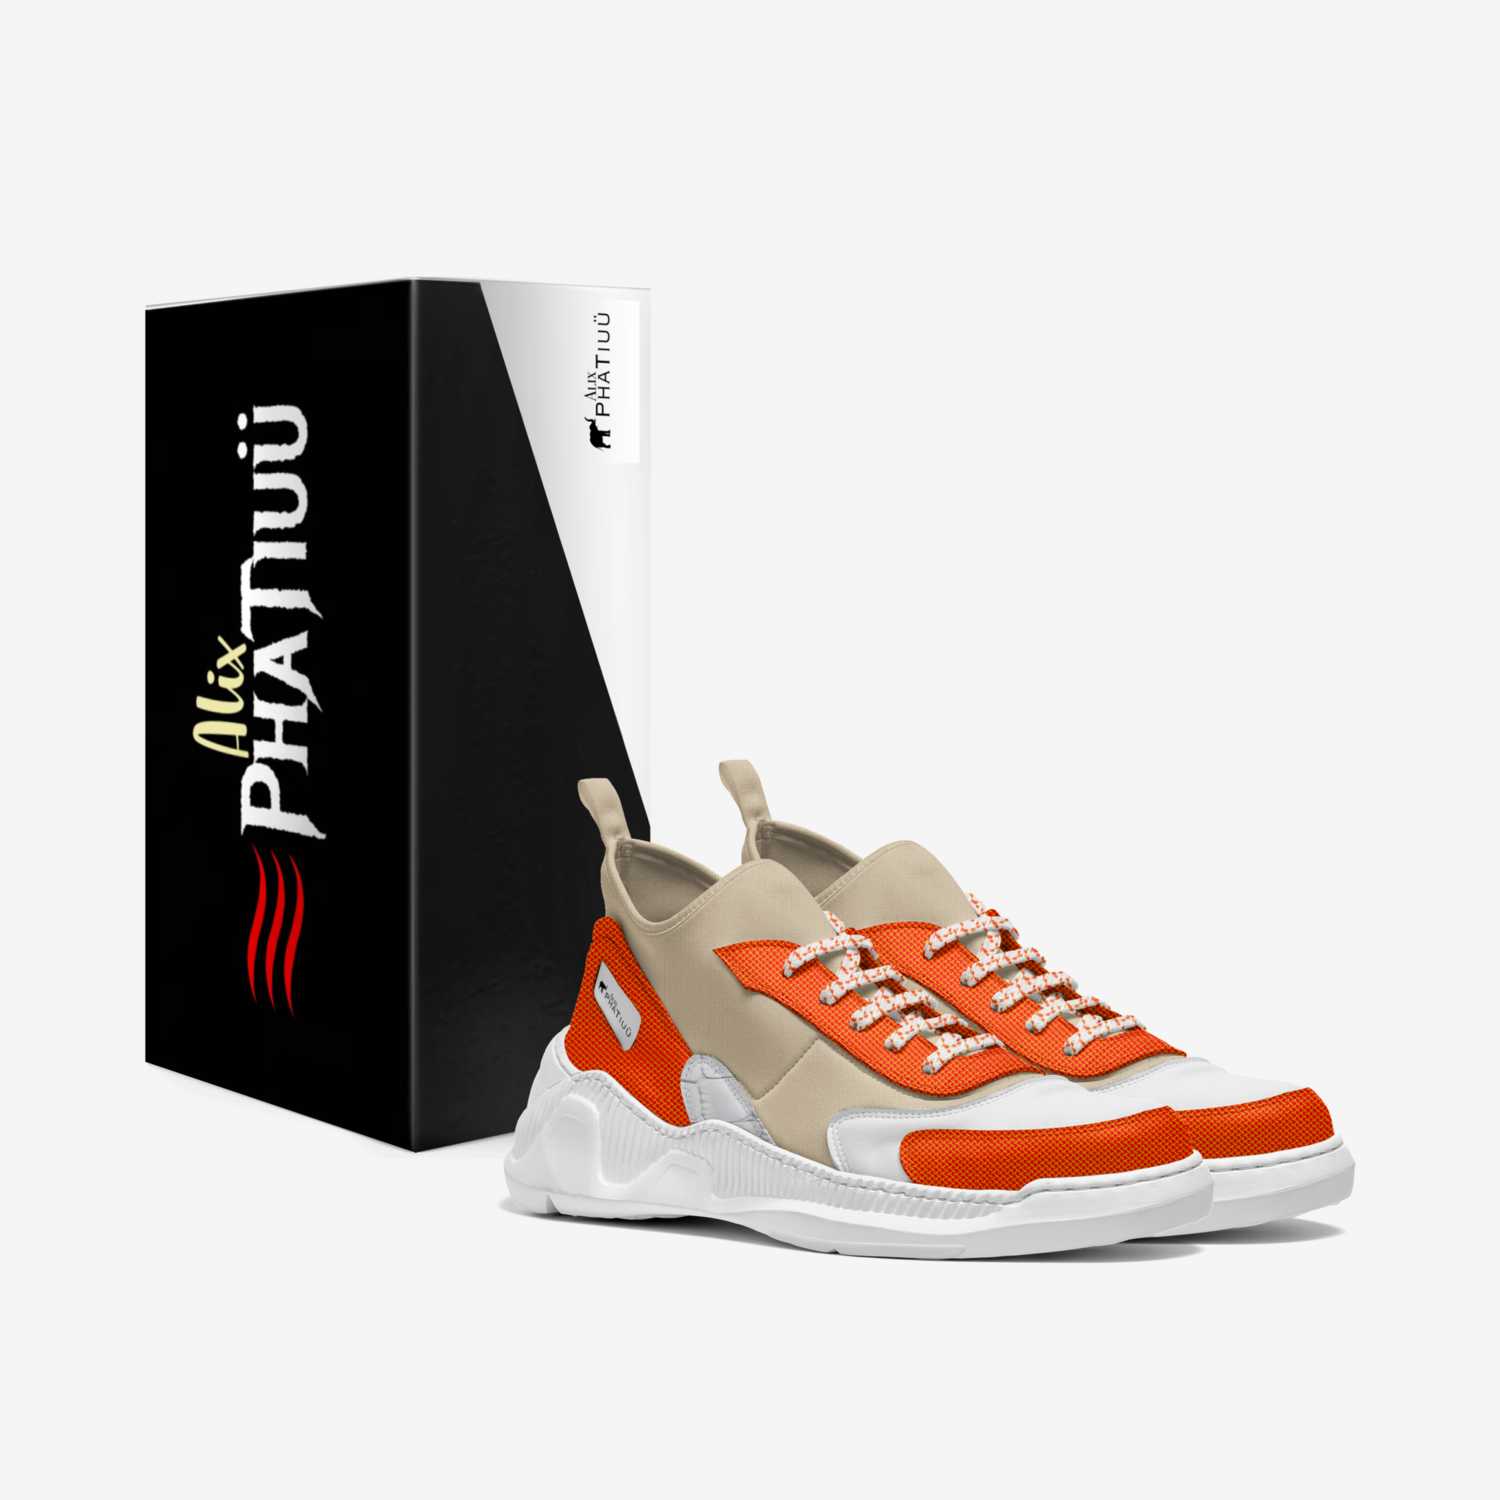 PhaTiuü custom made in Italy shoes by Derrick Nembhard | Box view